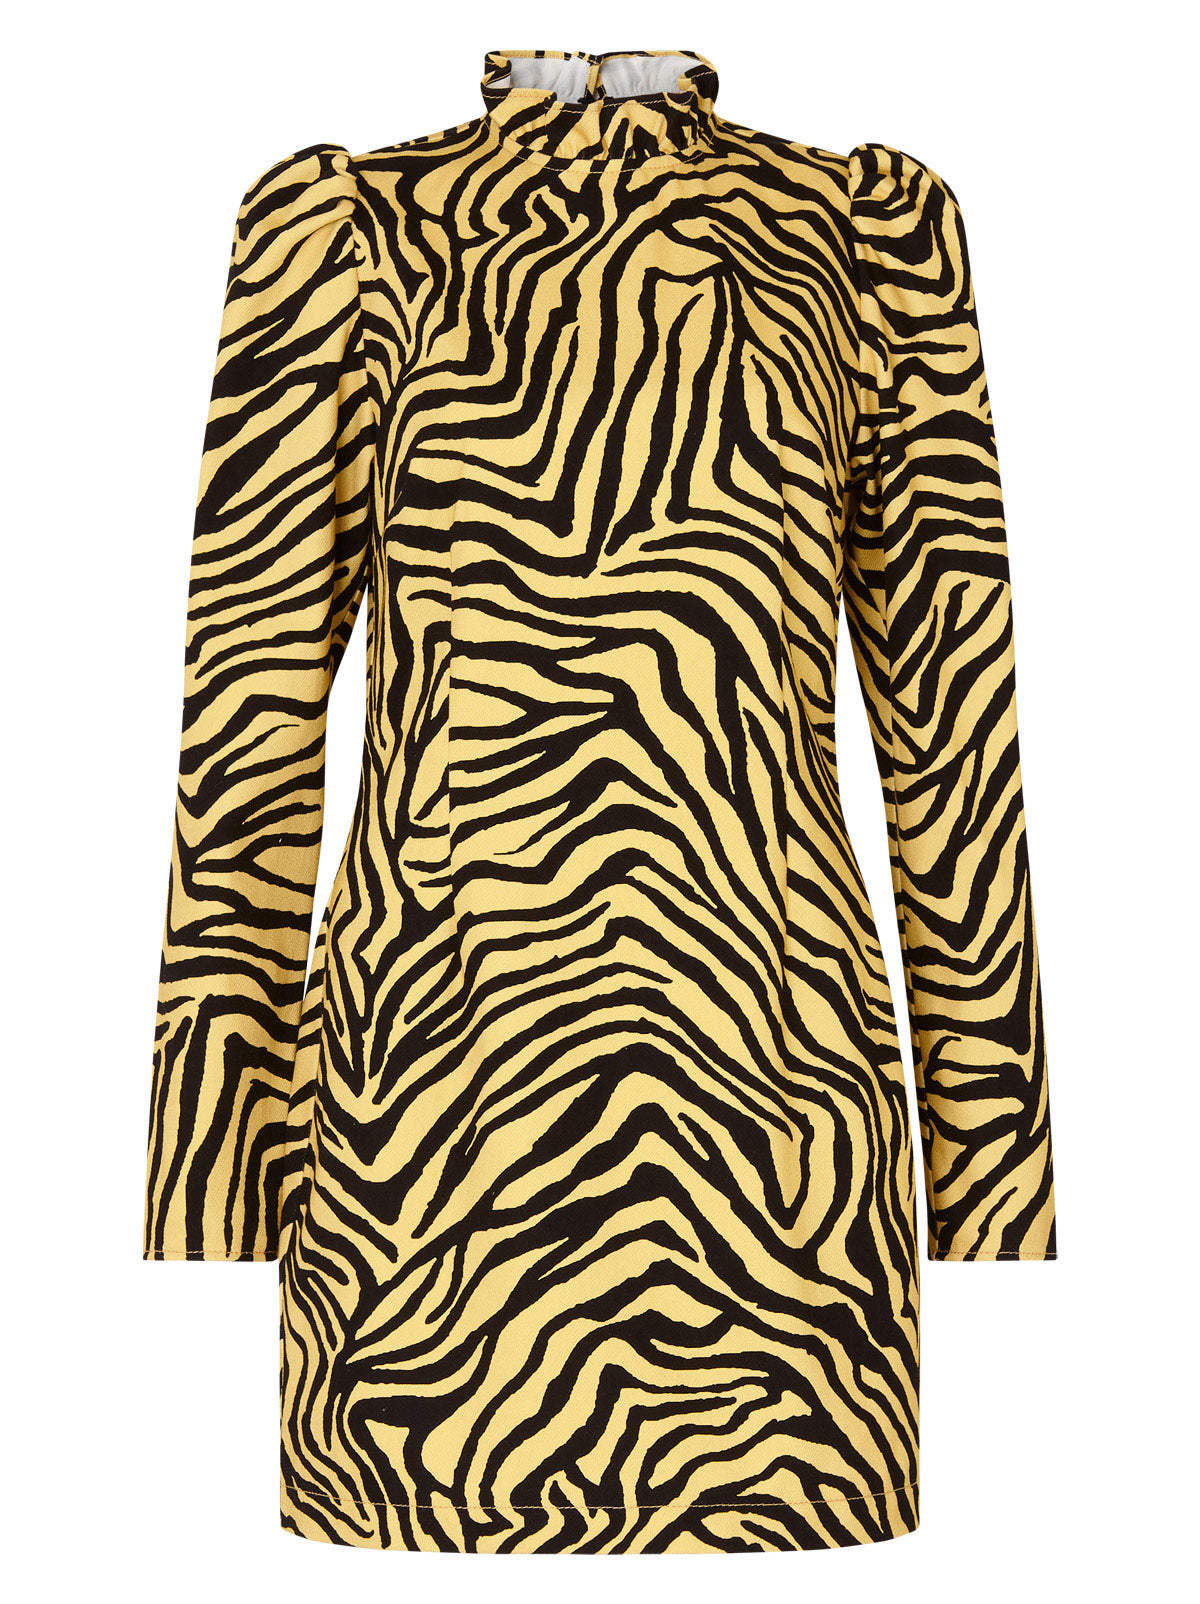 Danika Yellow Zebra Print Cotton Twill Mini Dress By KITRI Studio